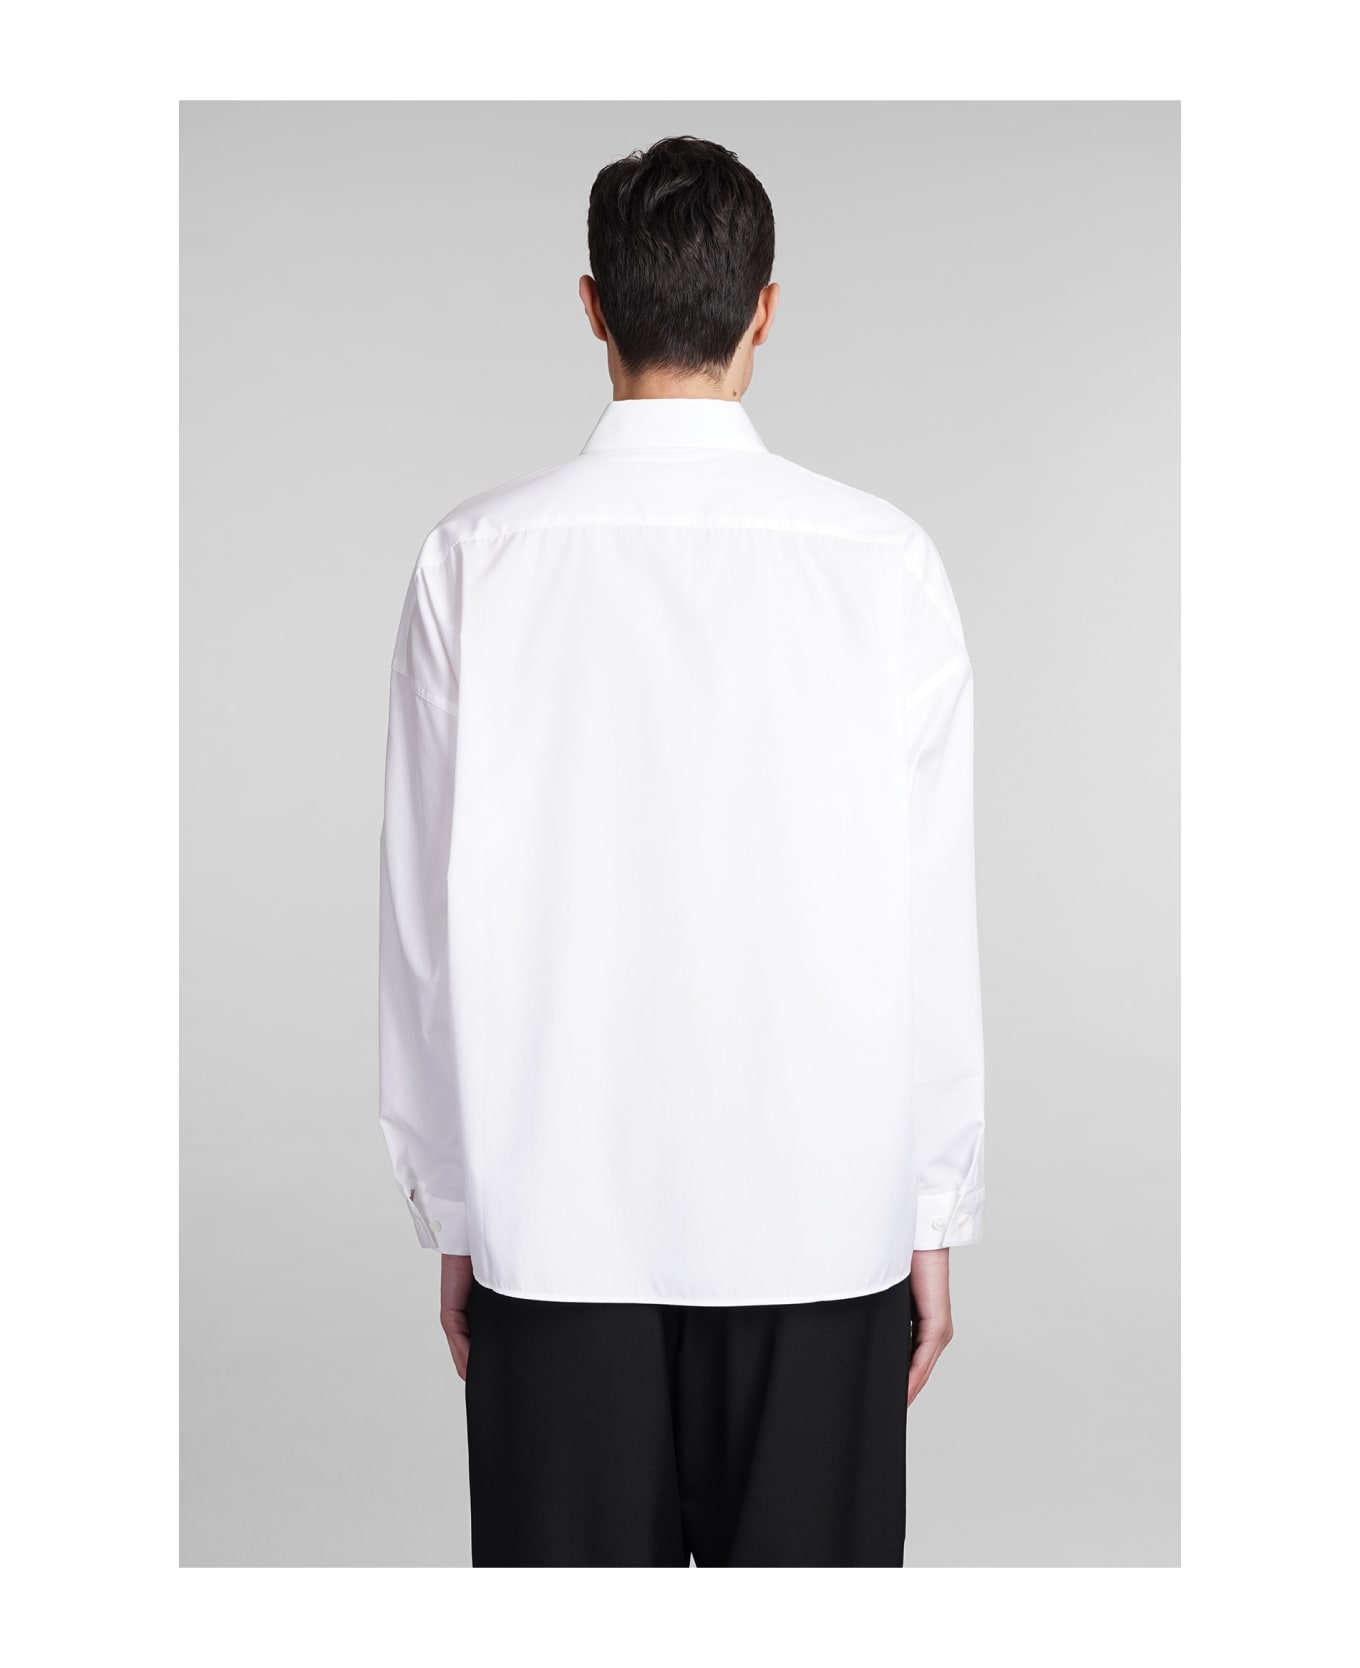 Marni Shirt In White Cotton - Lily White.